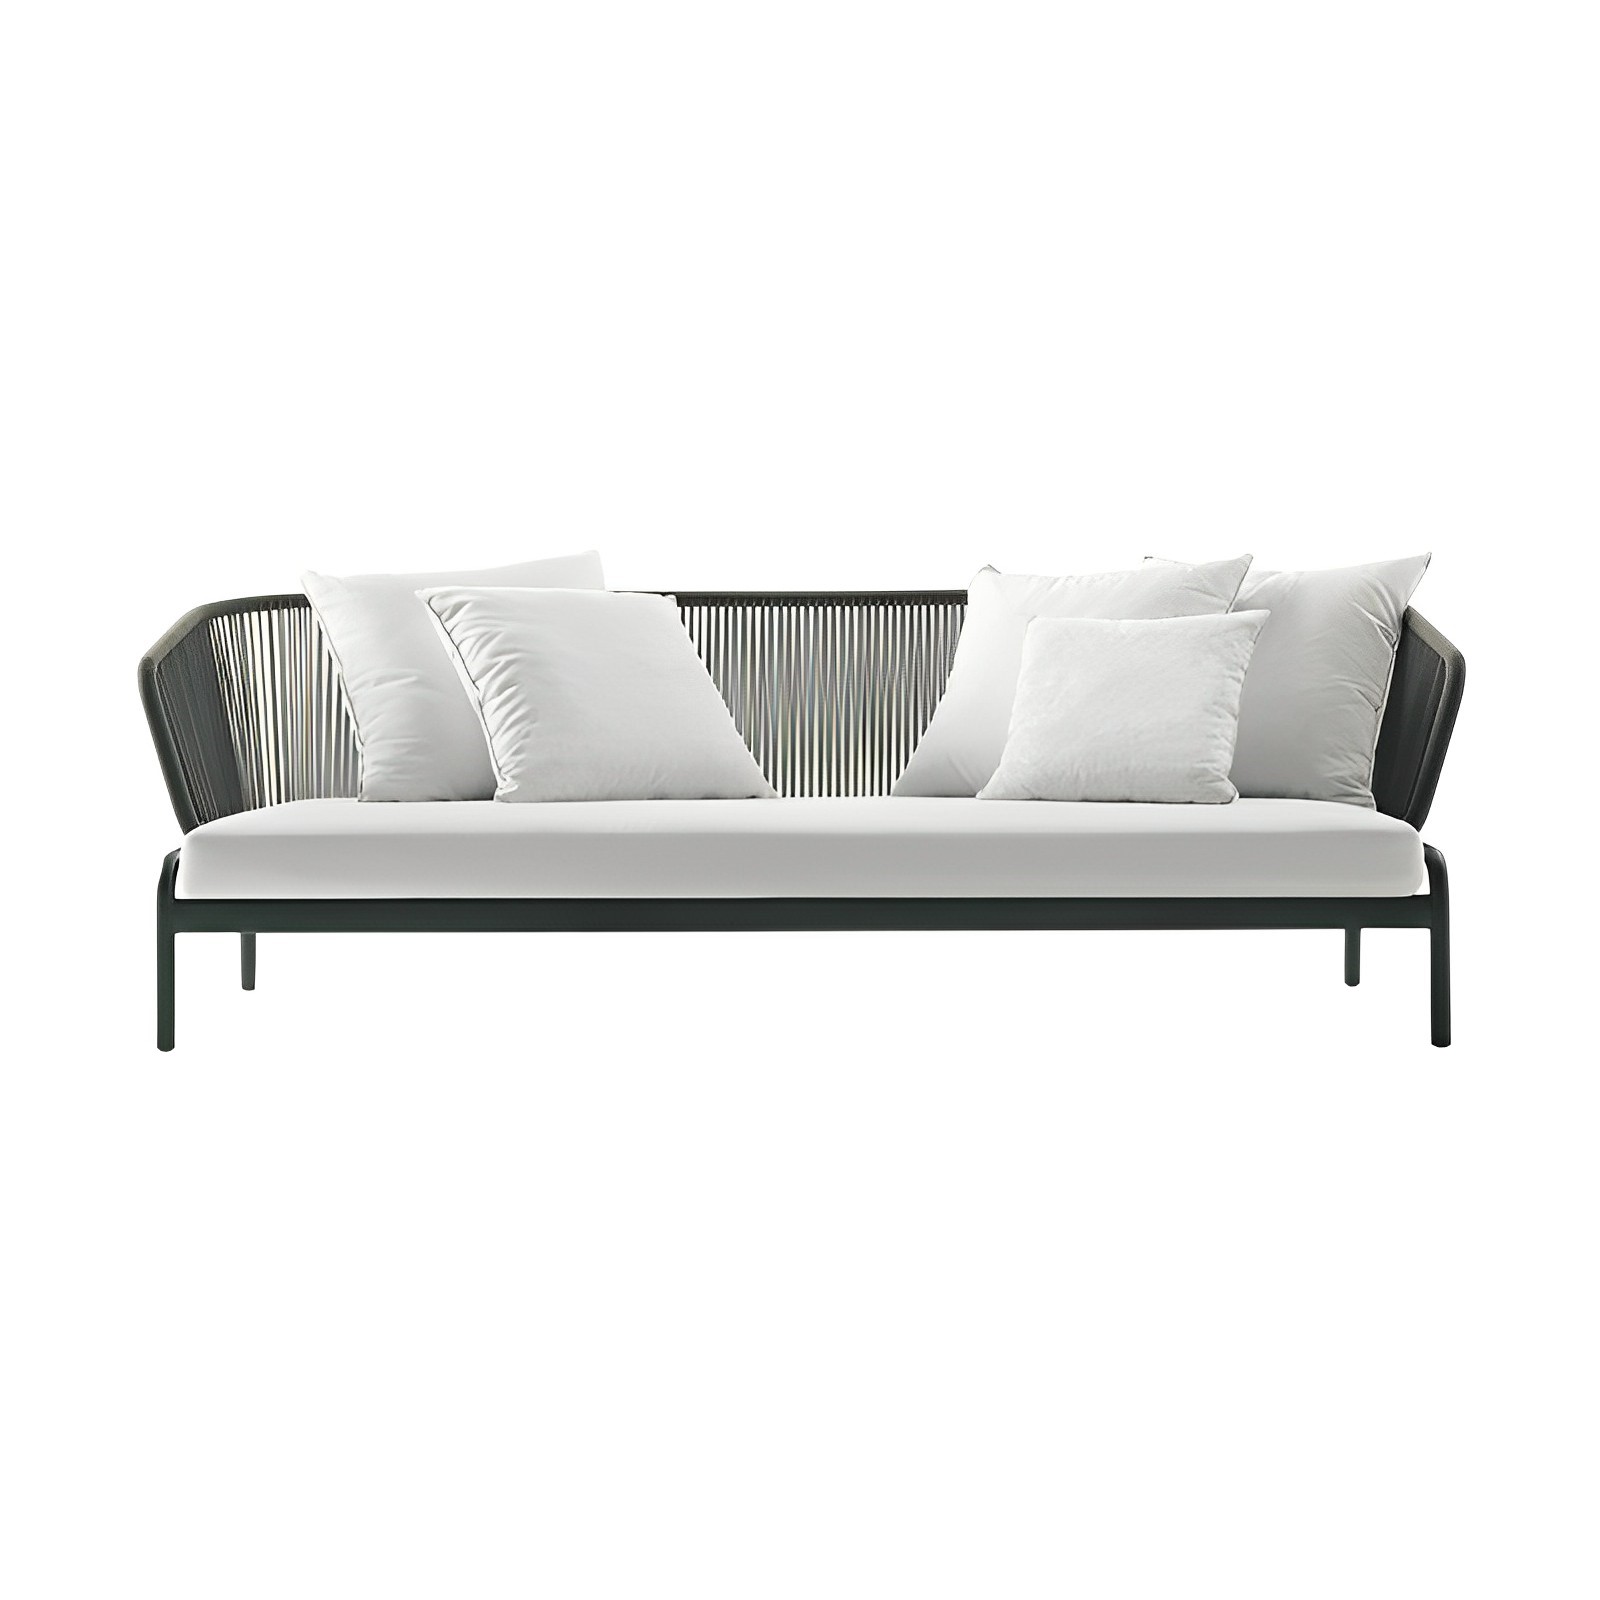 Rope Weaving Outdoor Aluminium Sofa Set - Garden Furniture | Shinlin Patio Furniture Sofa Set SF019